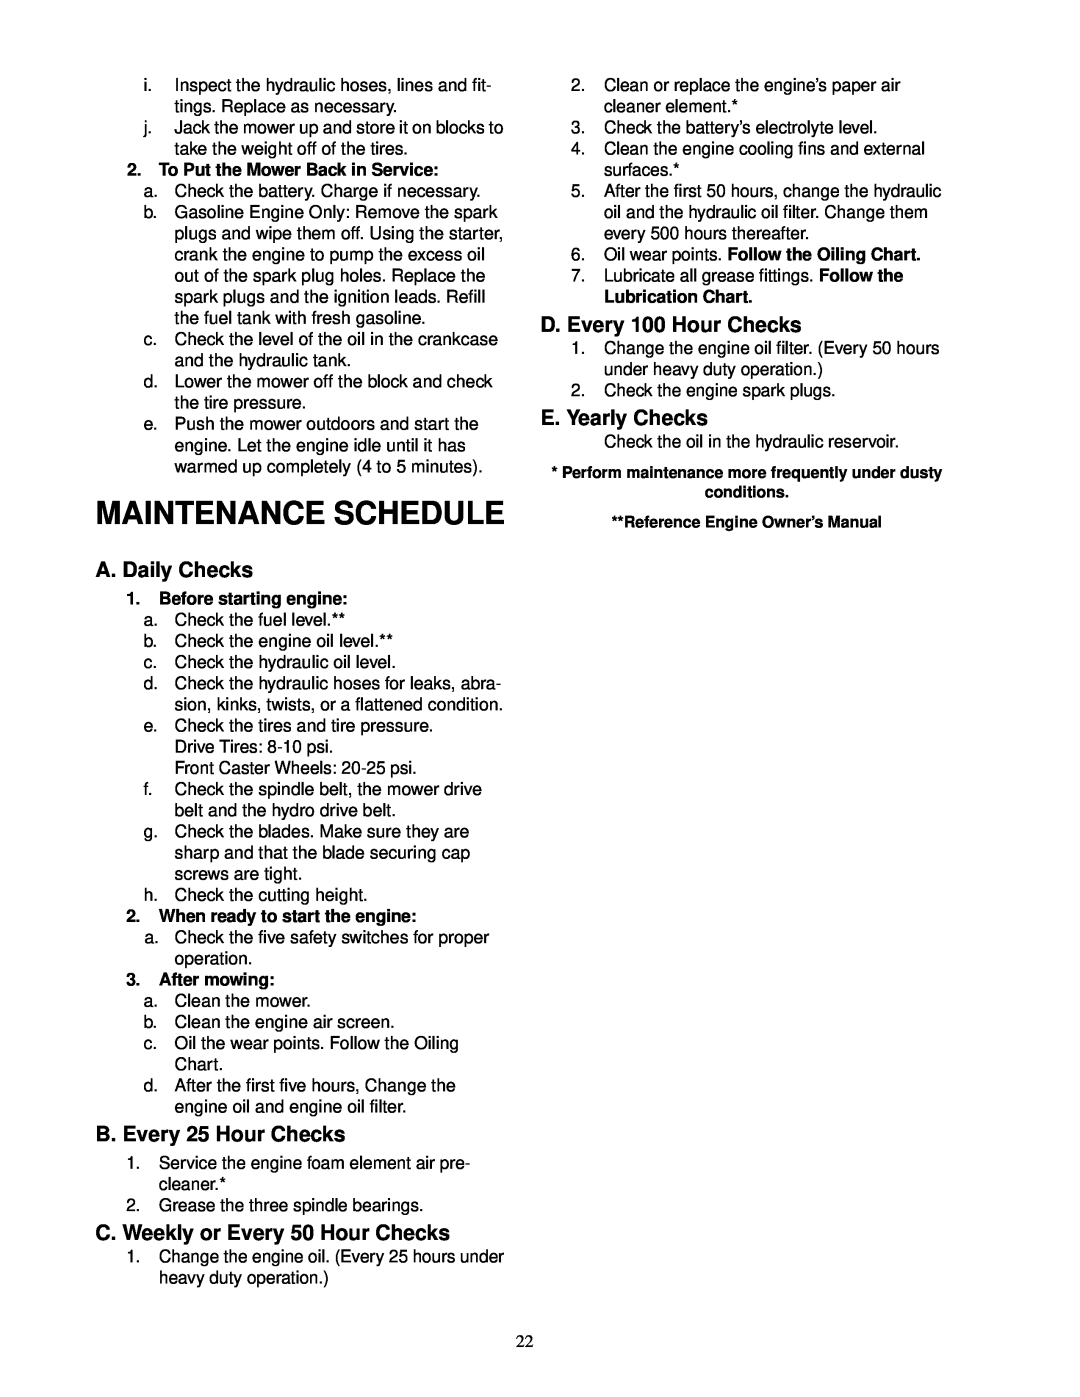 MTD 18HP Maintenance Schedule, A. Daily Checks, B. Every 25 Hour Checks, C. Weekly or Every 50 Hour Checks, After mowing 